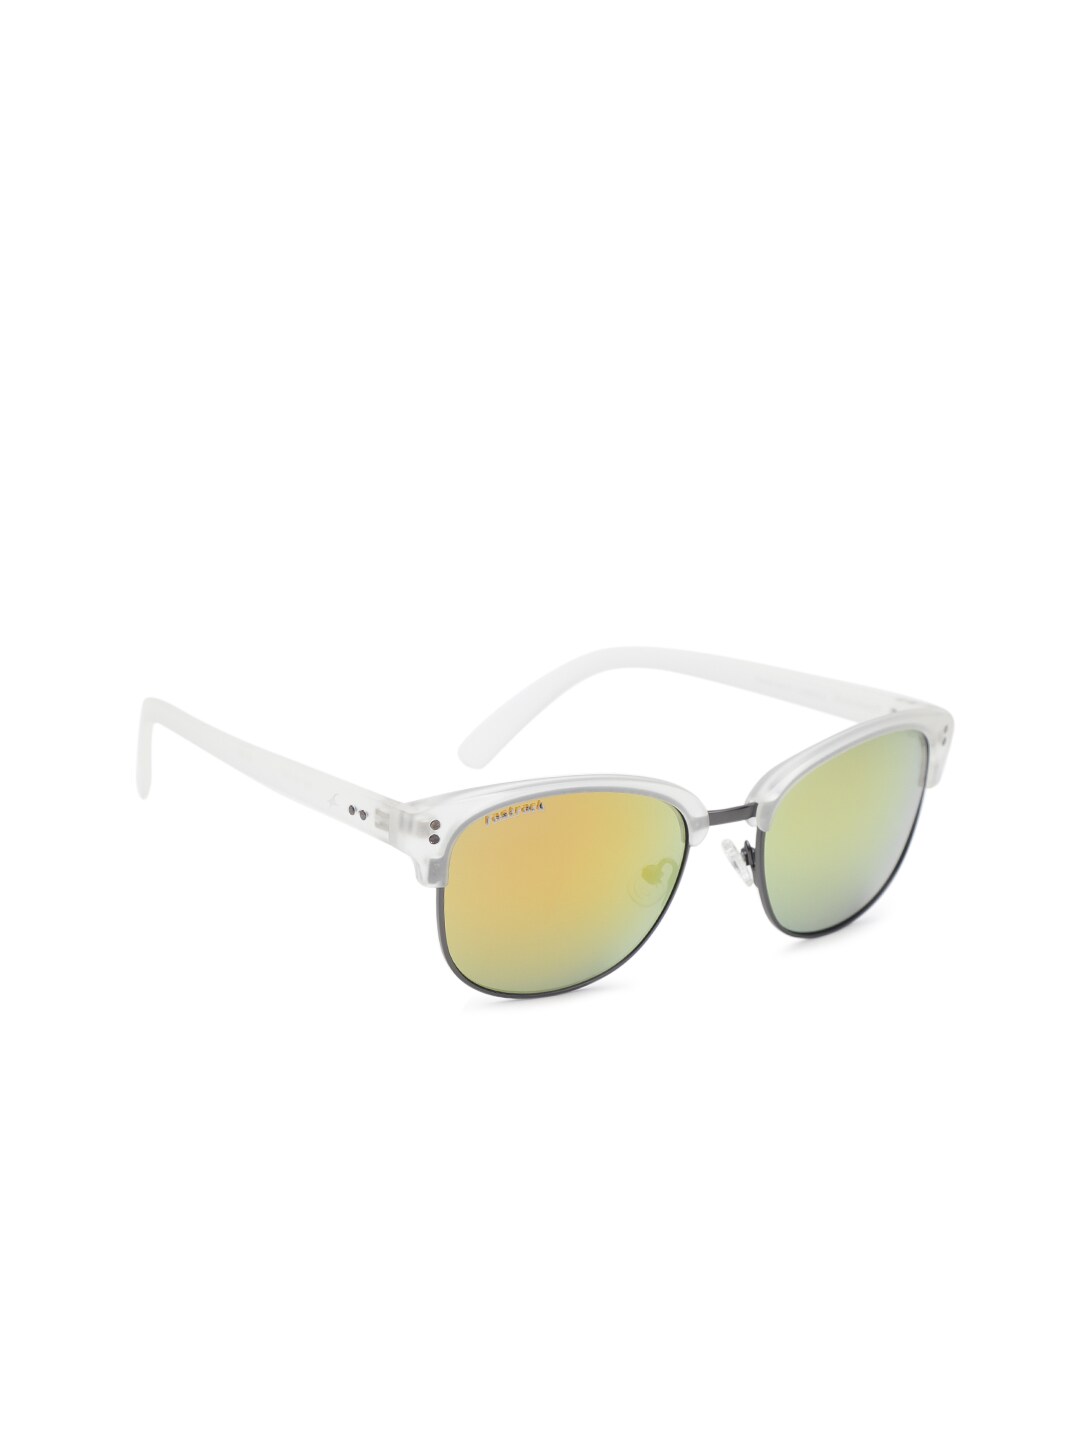 Fastrack Men's 100% UV protected Brown Lens Square Sunglasses : Amazon.in:  Fashion